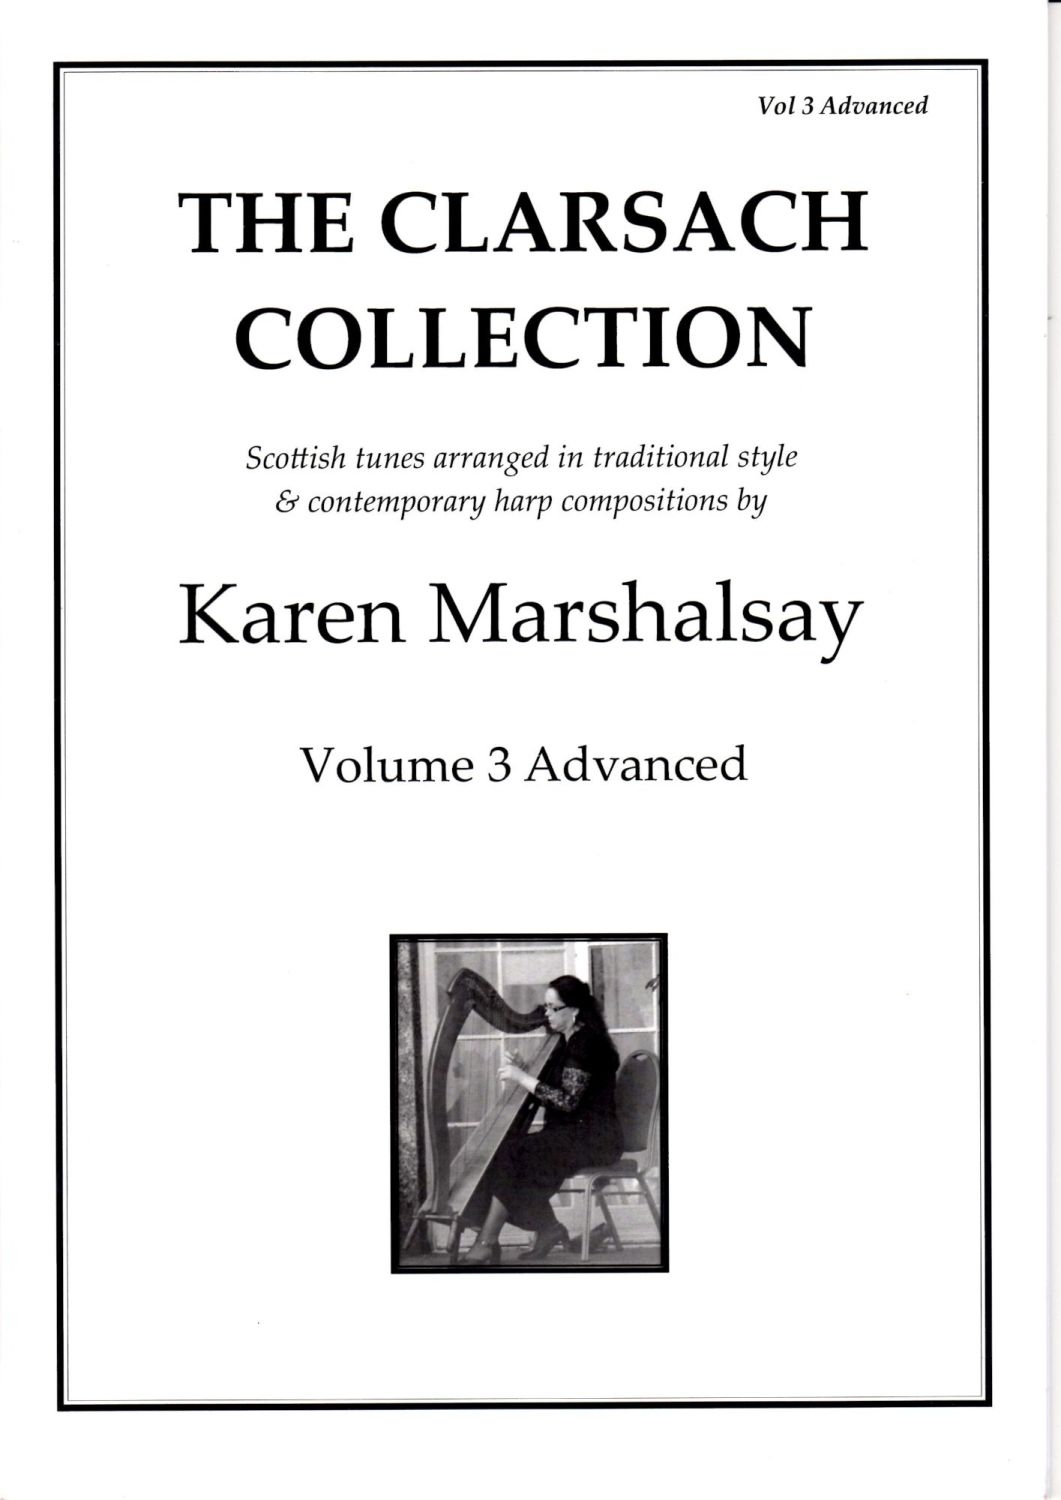 The Clarsach Collection Vol. 3 - Karen Marshalsay